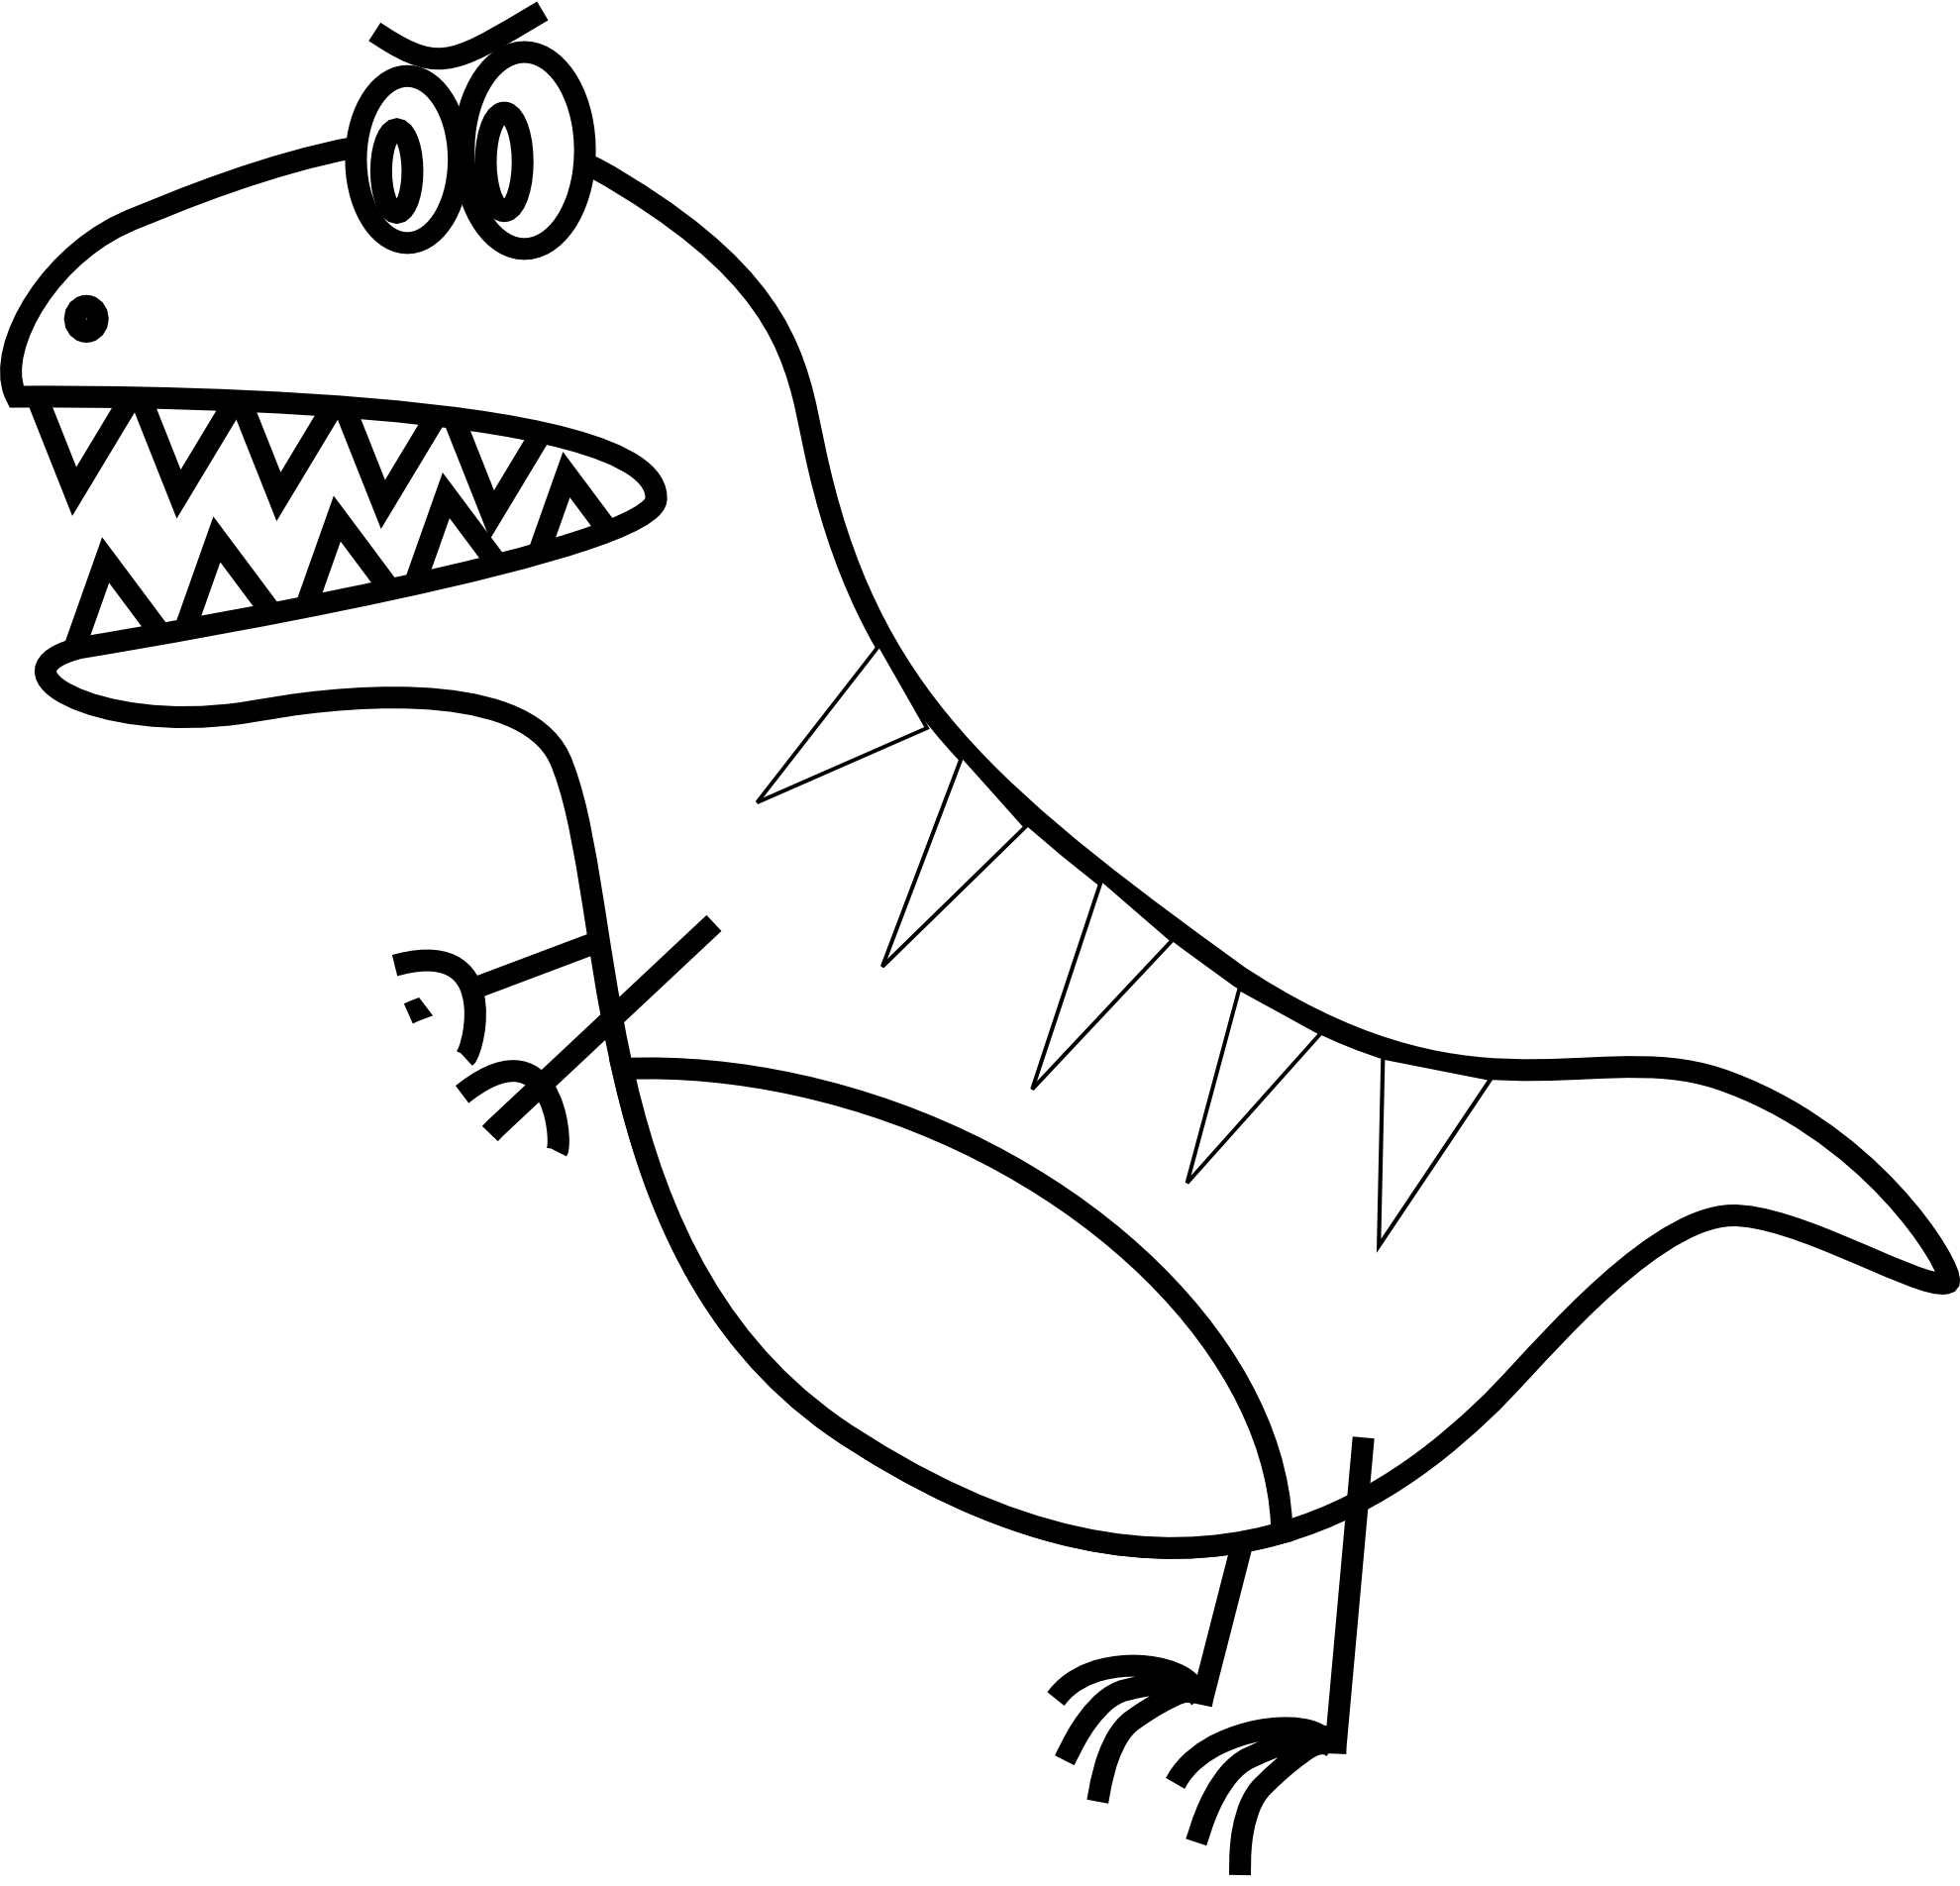 Ekg clipart cartoon. Dinosaur skeleton clip art